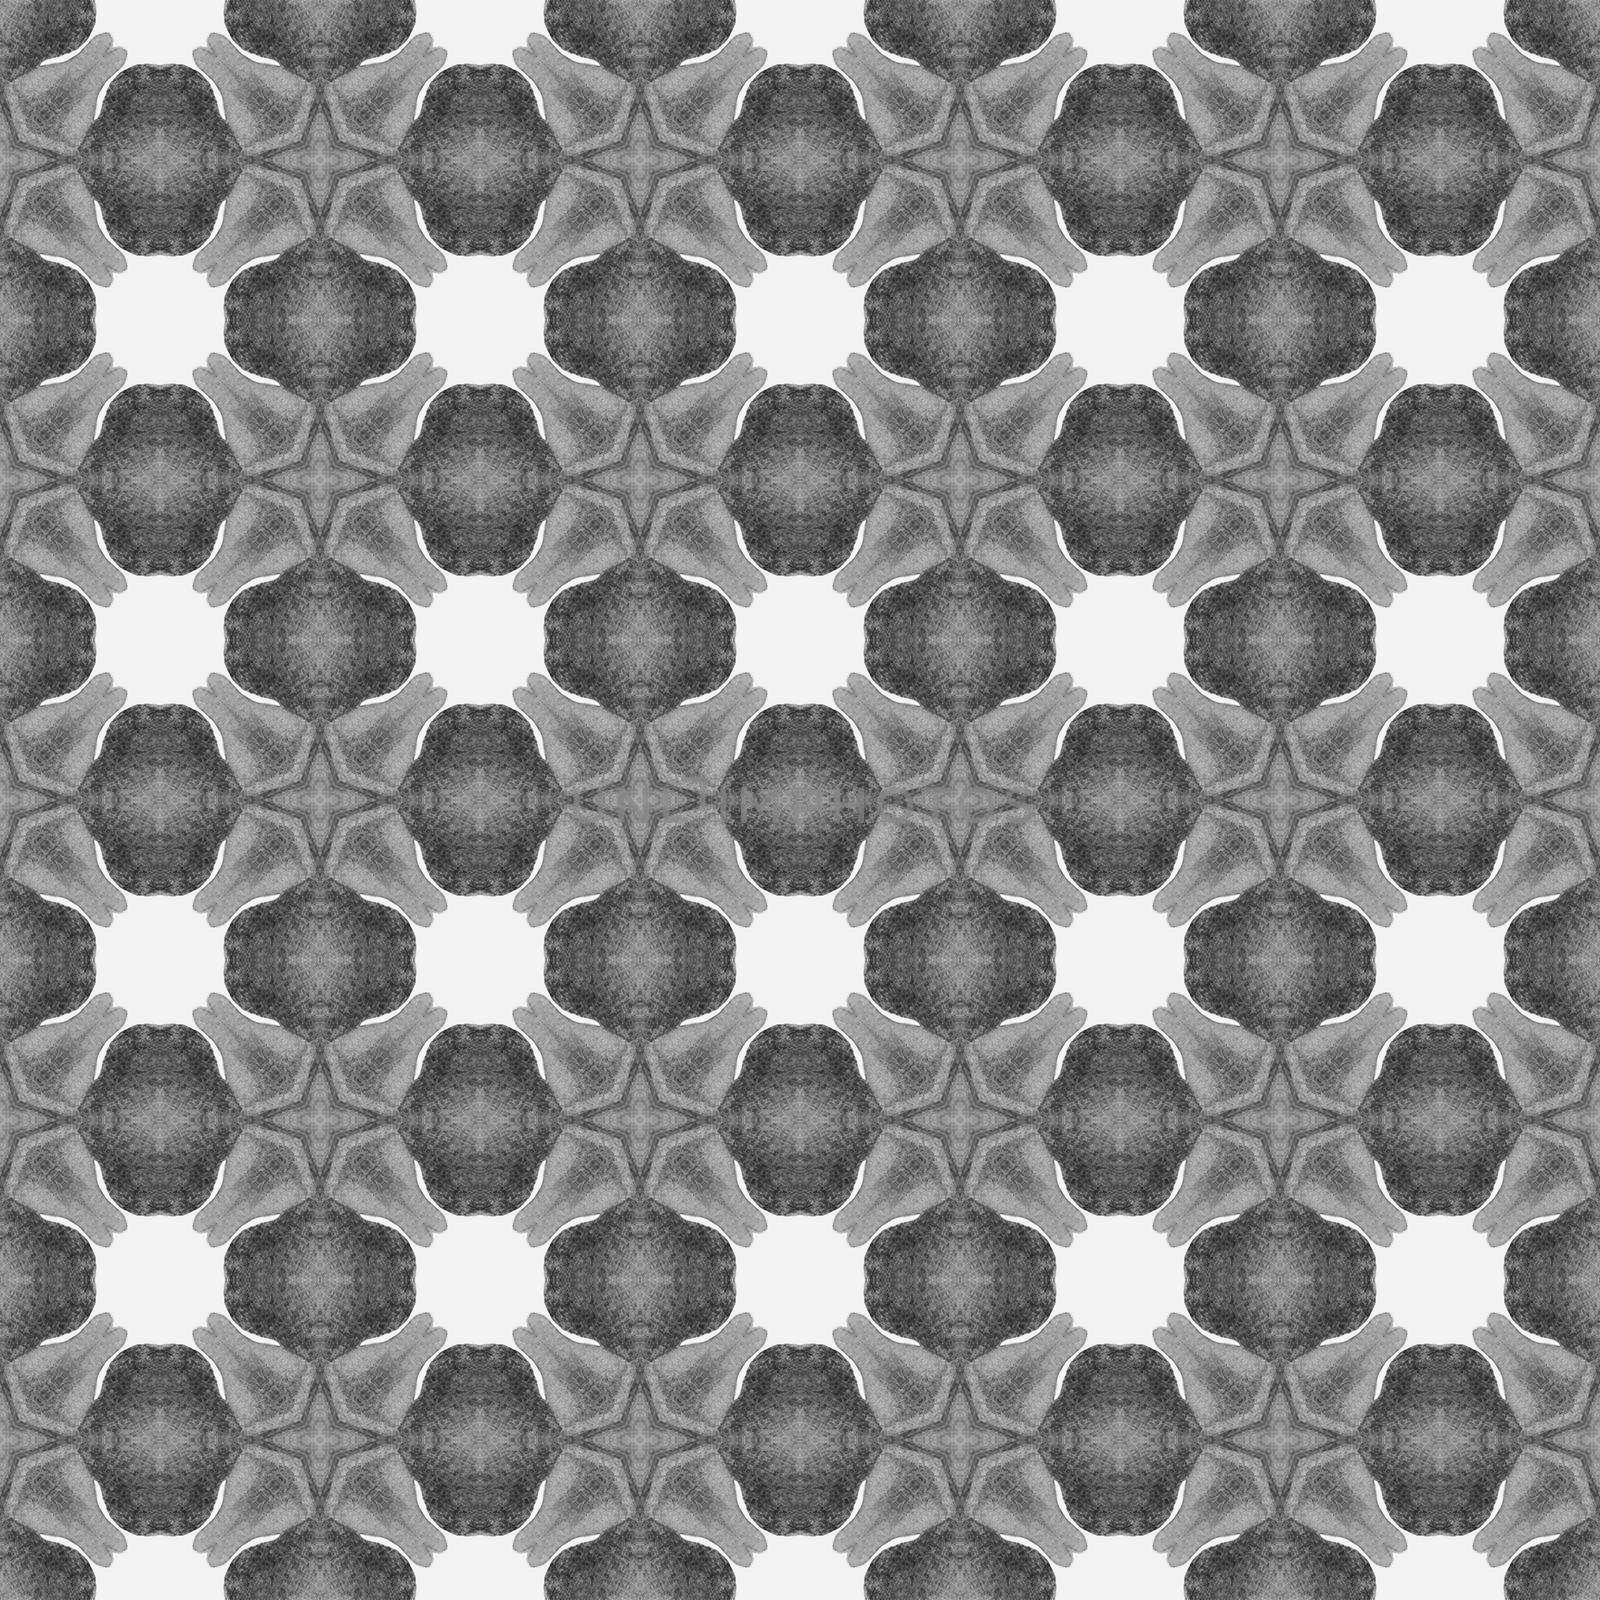 Organic tile. Black and white juicy boho chic by beginagain